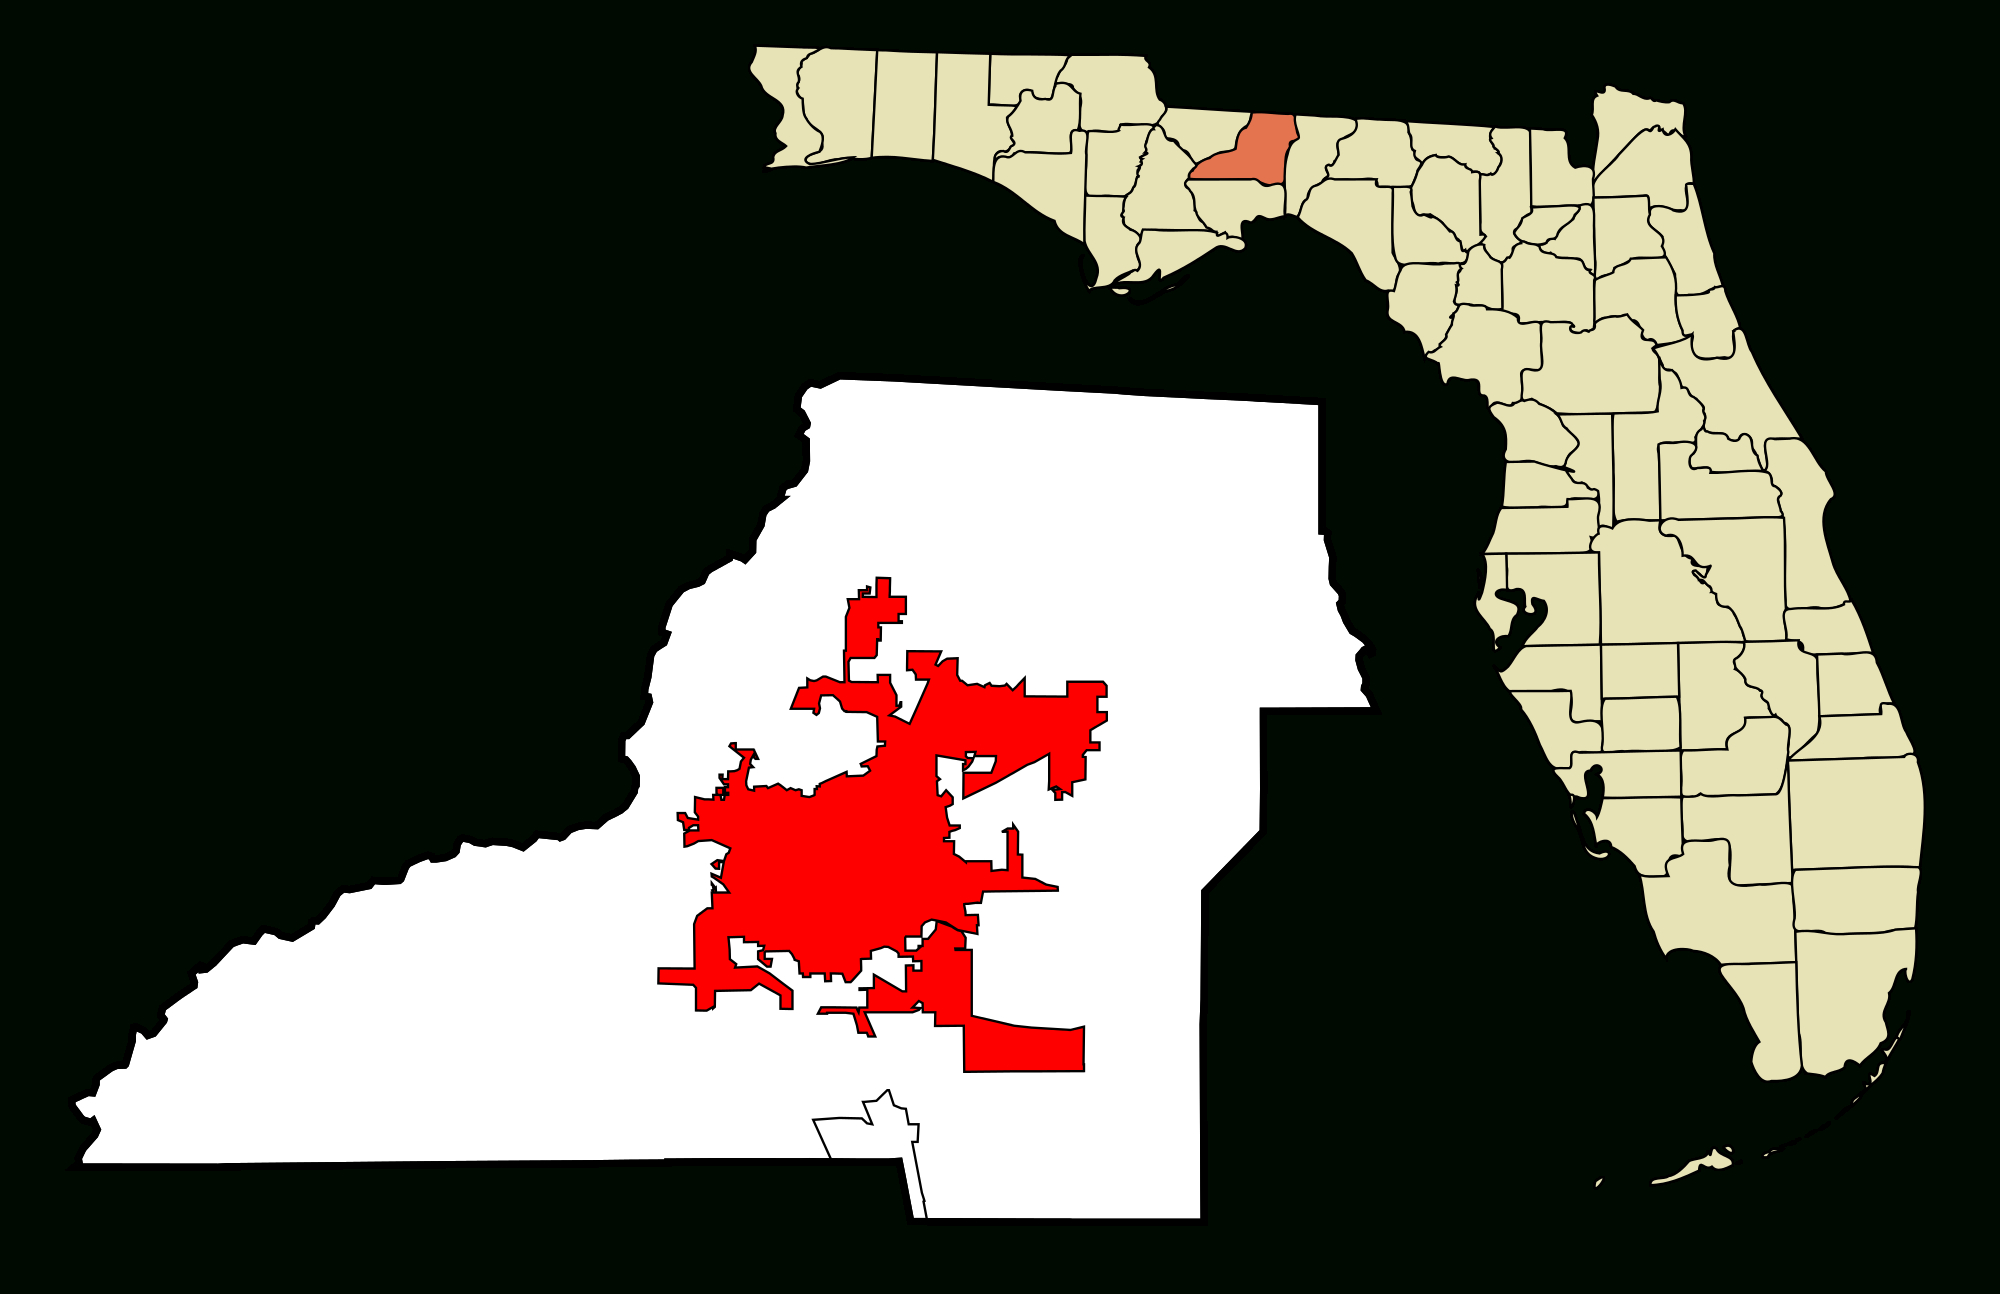 Tallahassee, Florida - Wikipedia - Tallahassee On The Map Of Florida